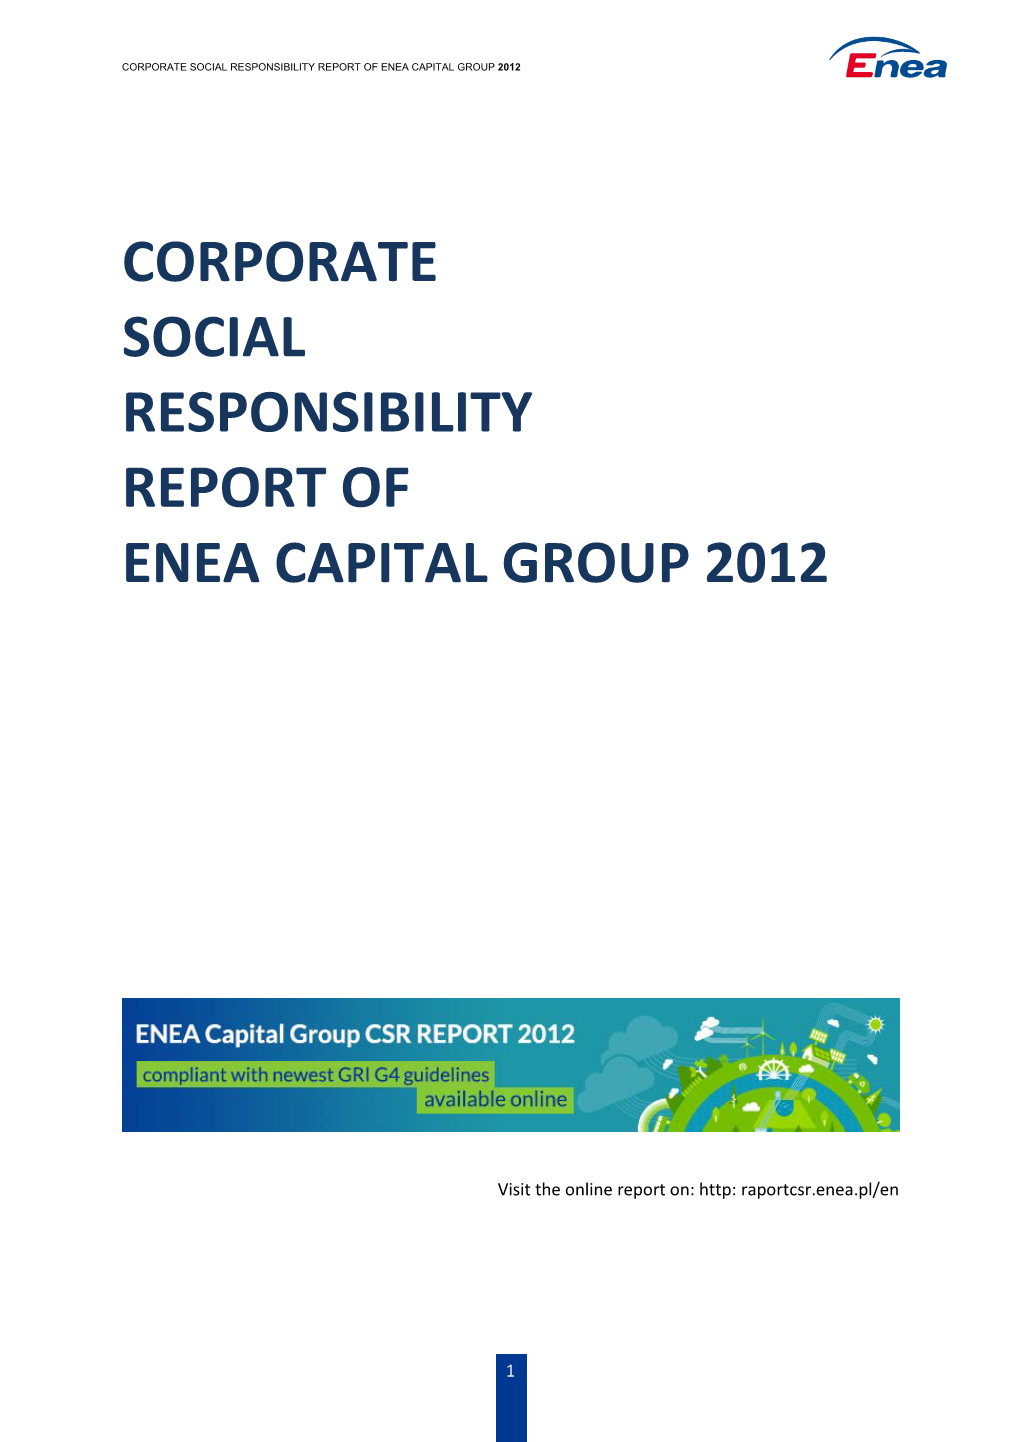 Corporate Social Responsibility Report of Enea Capital Group 2012